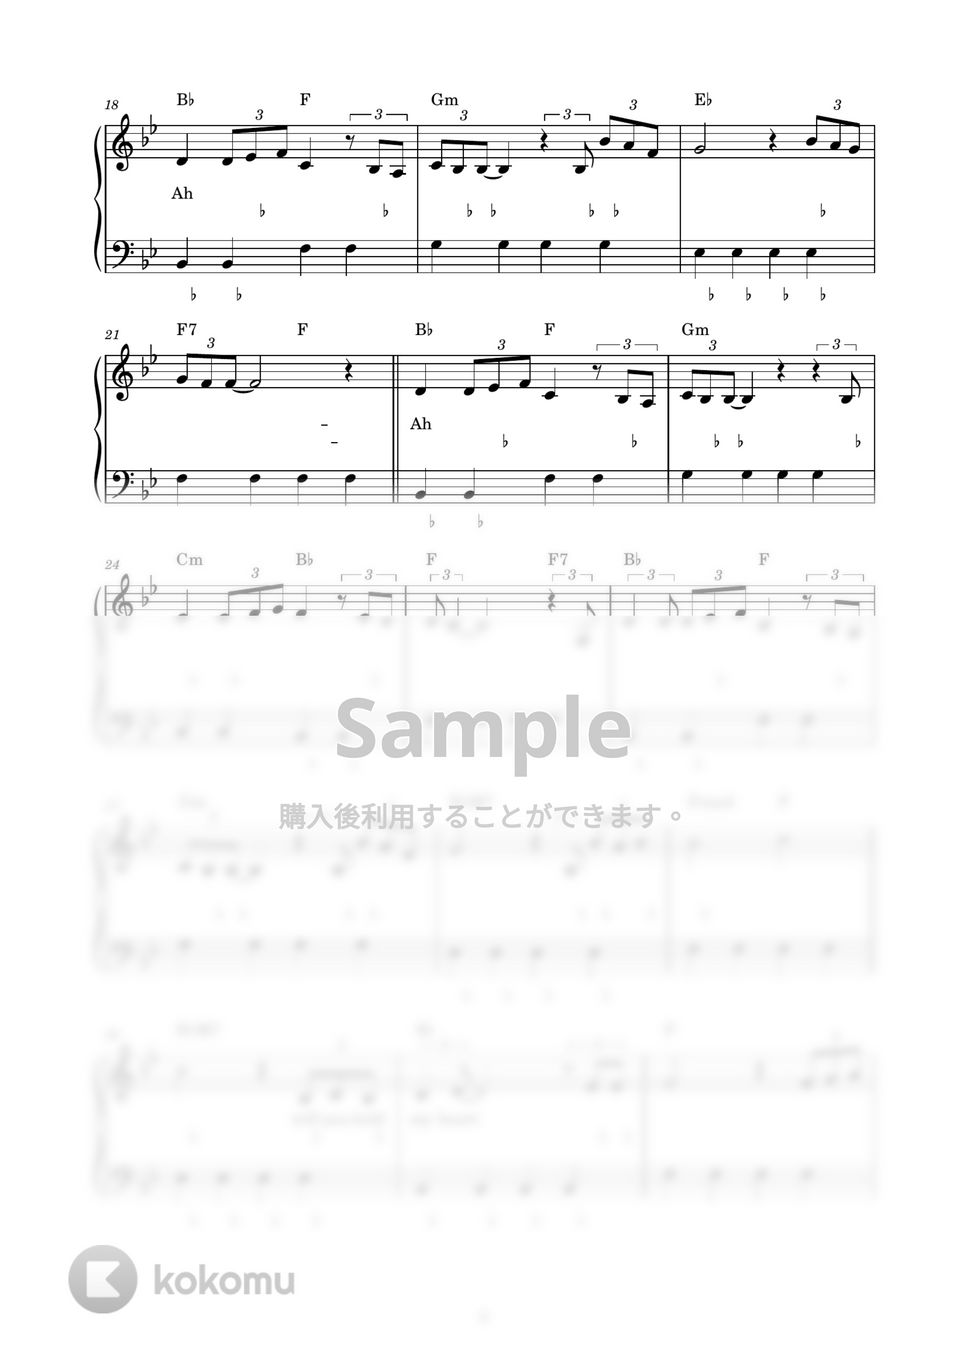 X Japan - Forever Love (ピアノ楽譜 / かんたん両手 / 歌詞付き / ドレミ付き / 初心者向き) by piano.tokyo